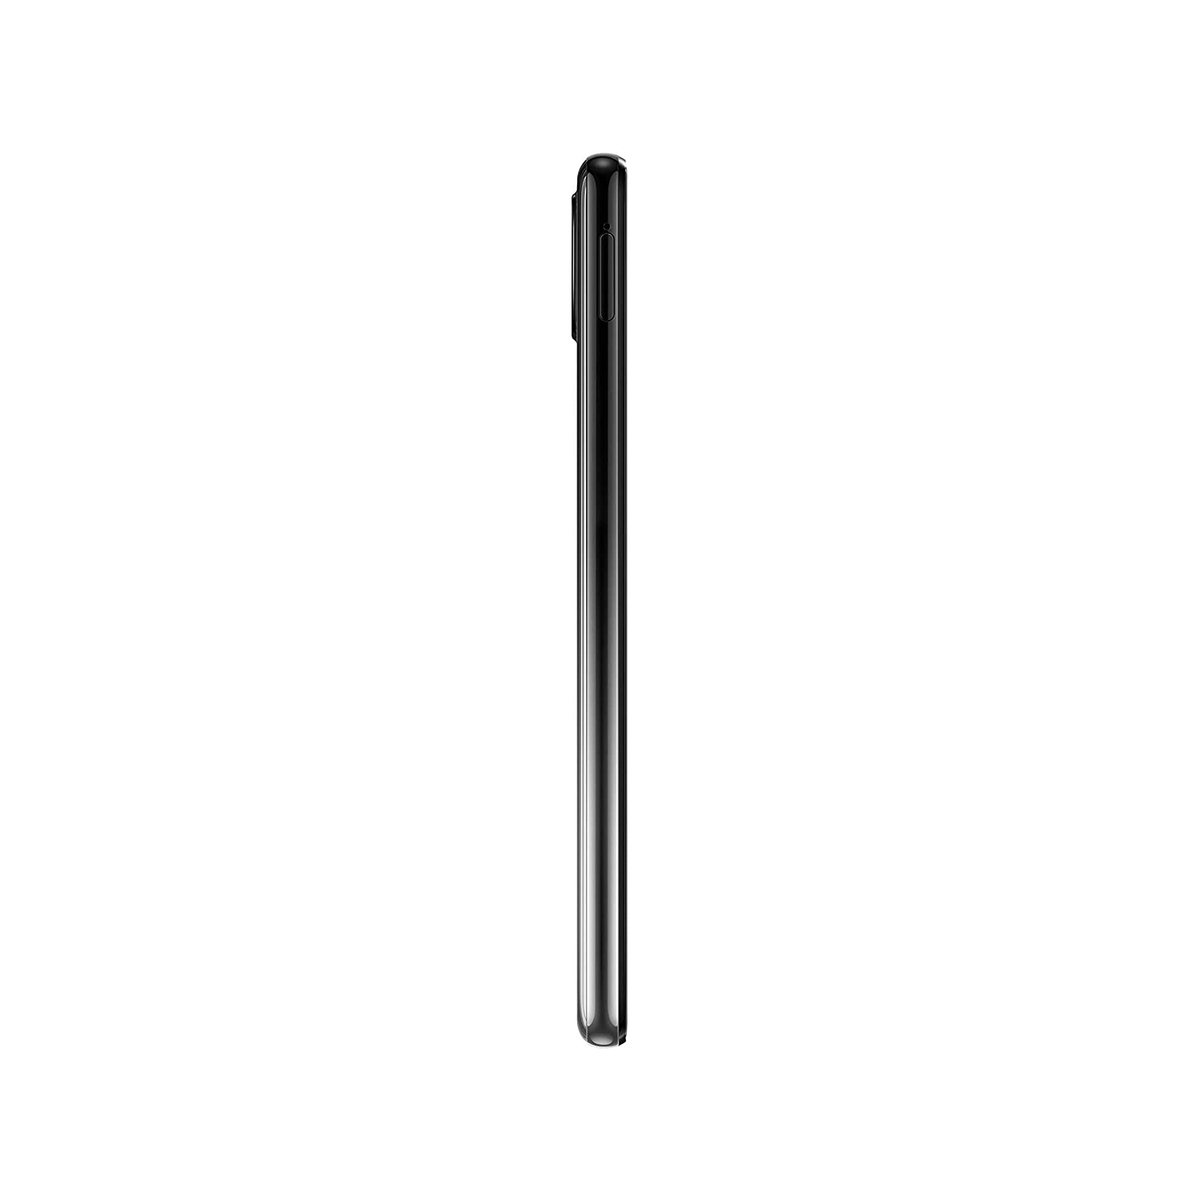 Samsung Galaxy M62 (SM-M625FZKGMEA) 128GB Black